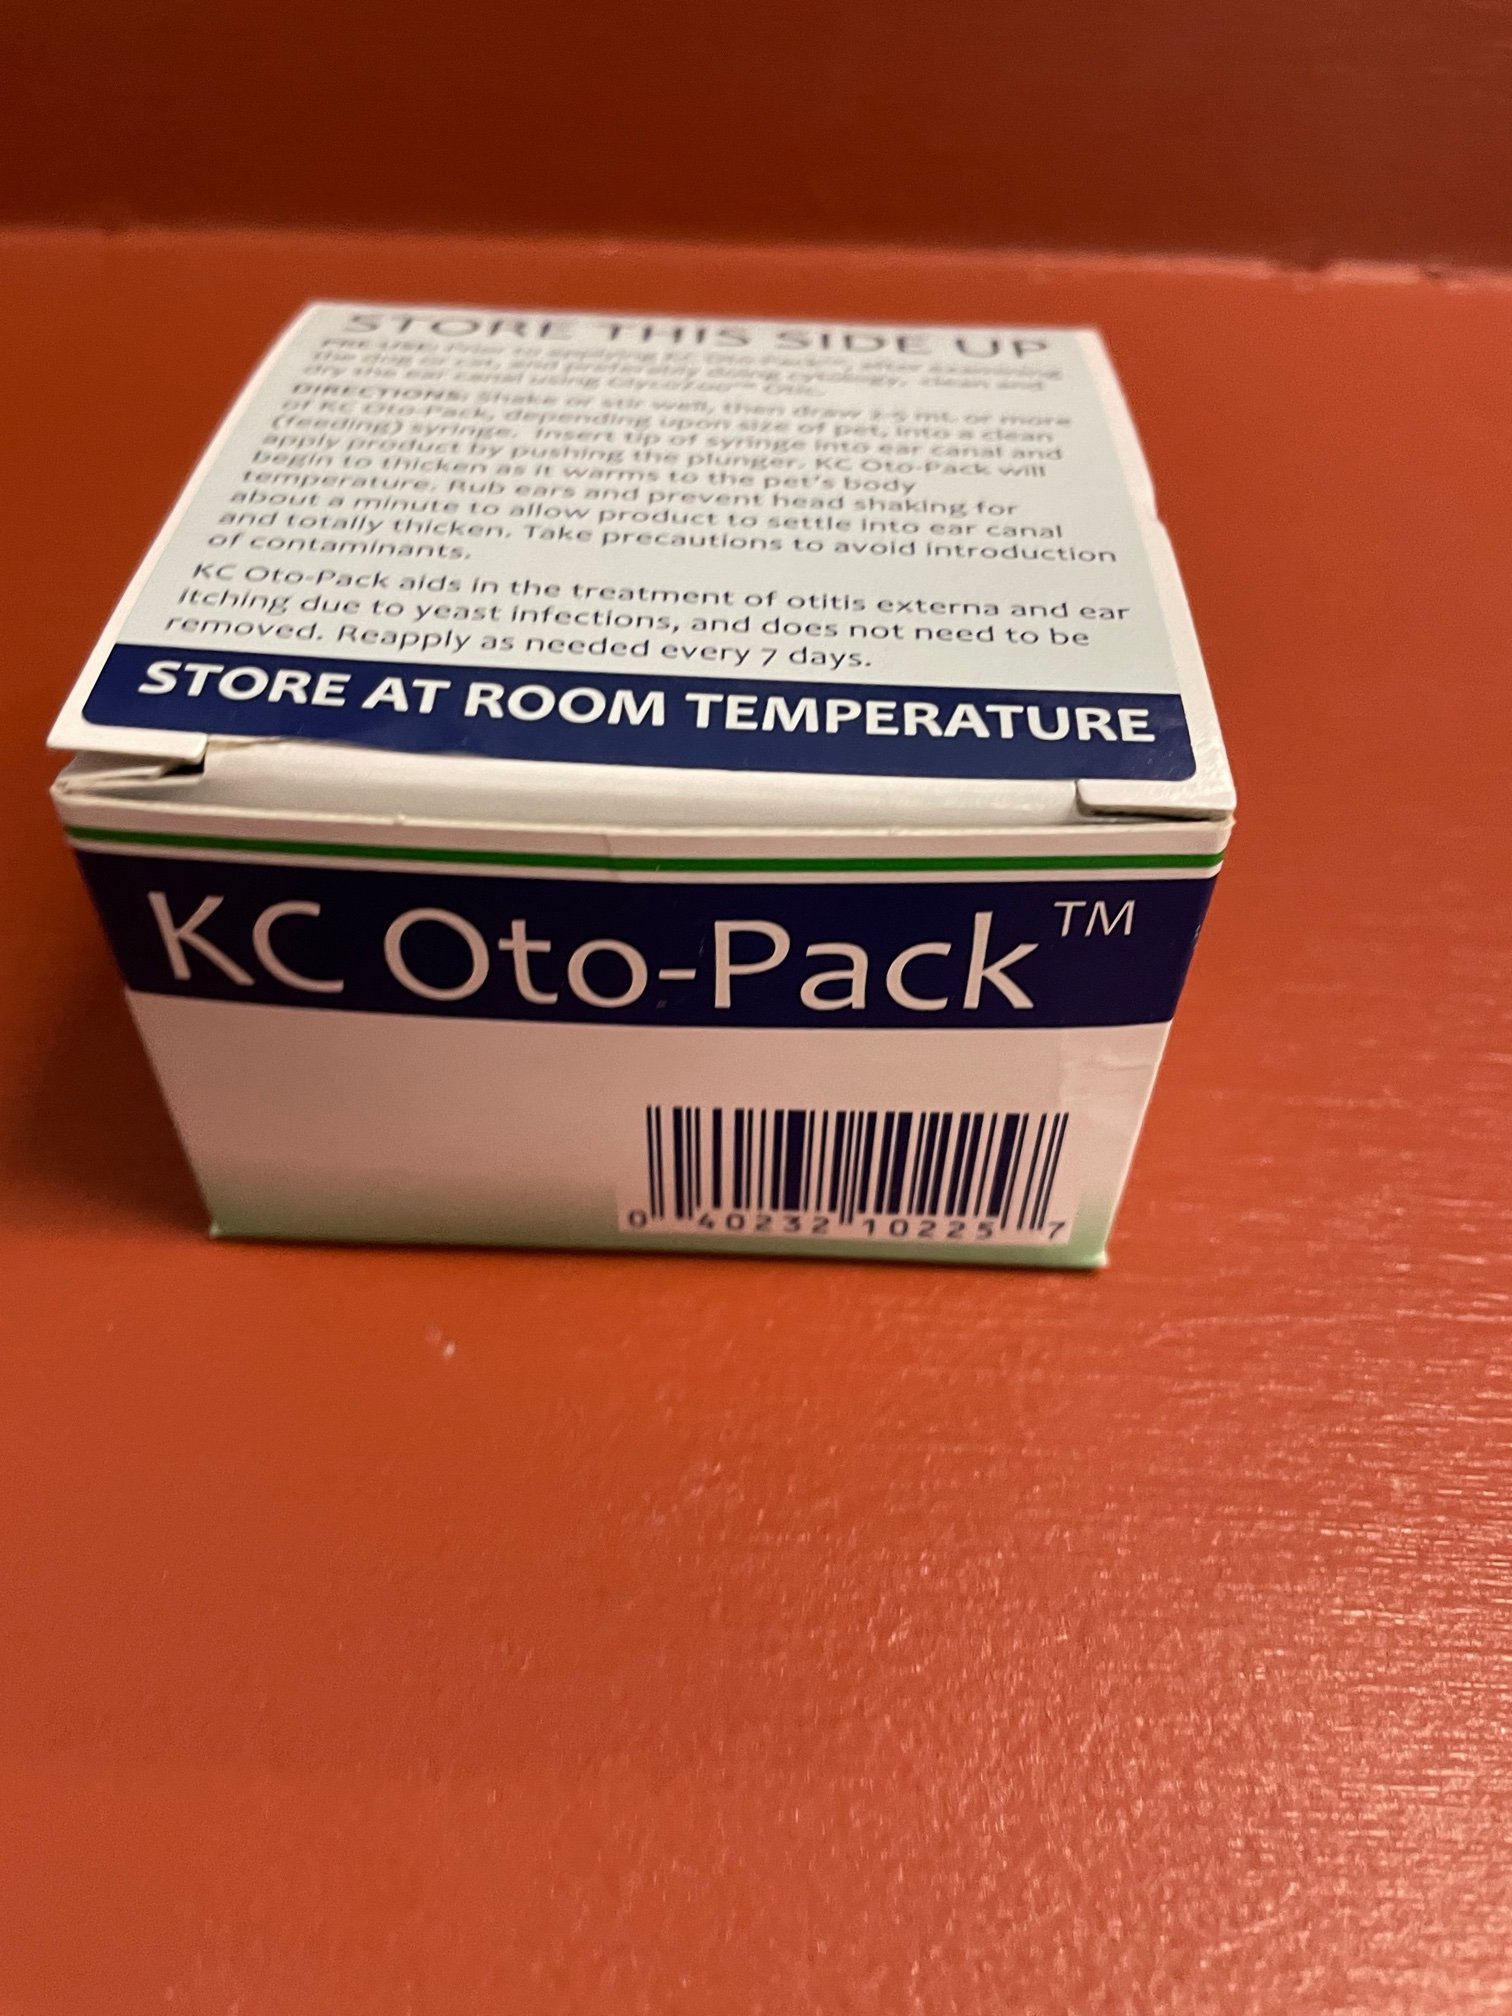 Kc Oto-Pack, 2 oz Jar By Dermazoo No Syringe Include